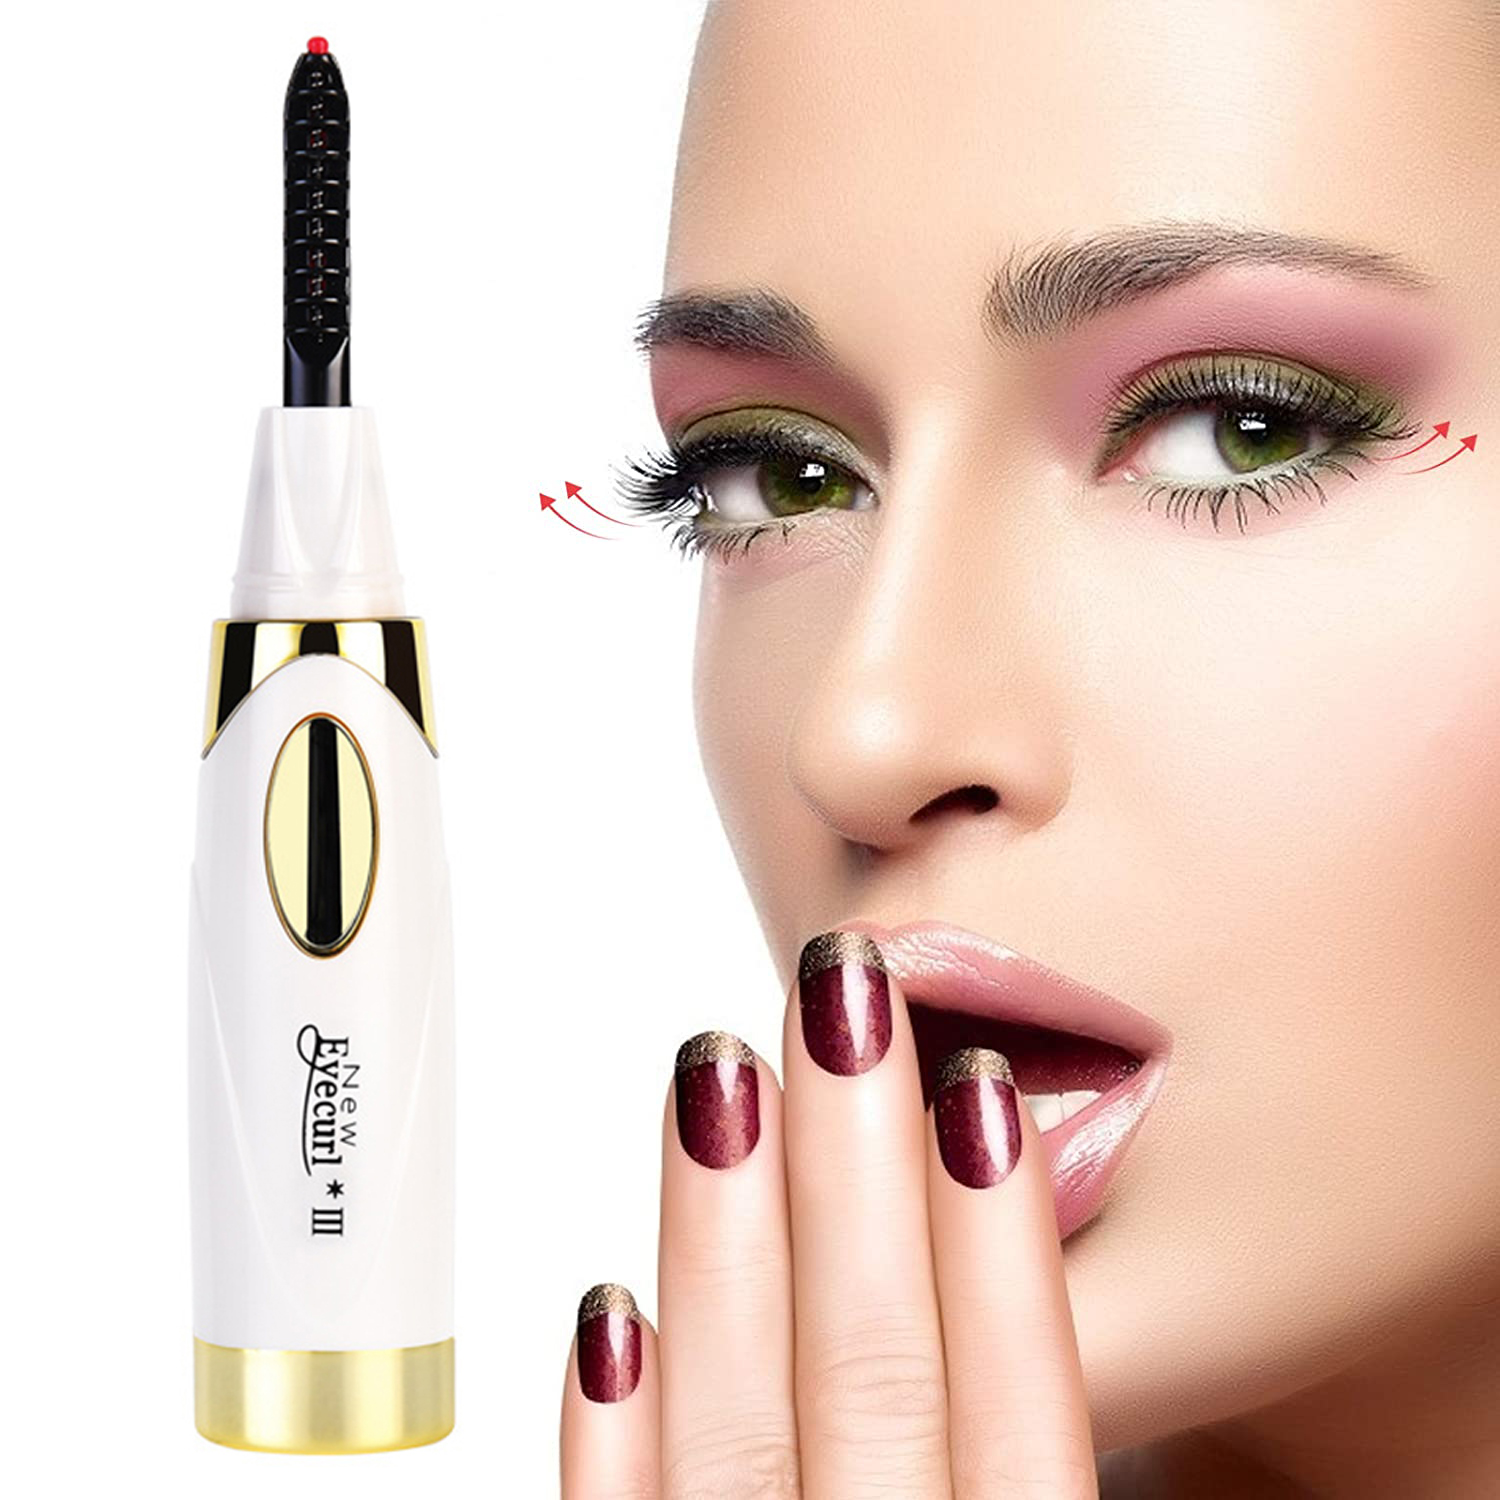 LONGZHU1 Beauty Makeup Tool for Women Eye Lash Curler Professional Long lasting Electric Eyelash Curler Heated Eyelash Curler USB Rechargeable